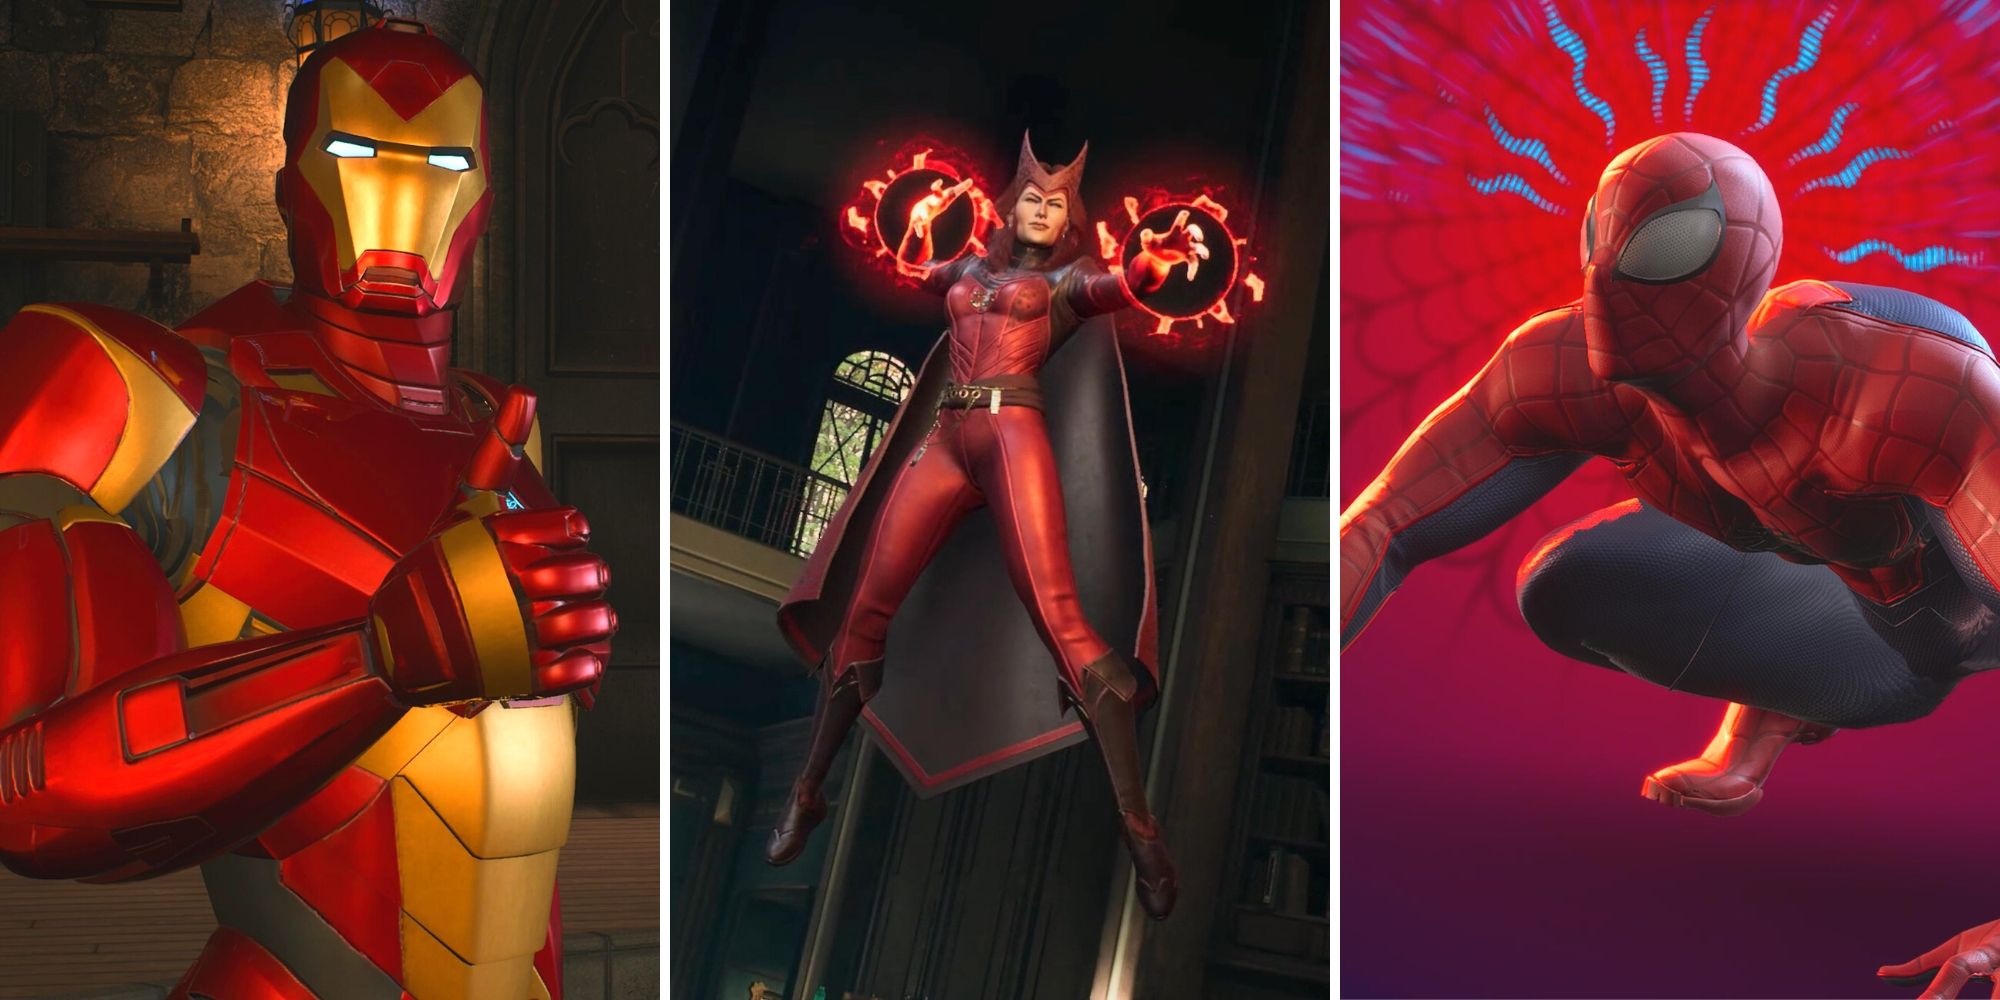 Marvel's Midnight Suns Gameplay Walkthrough 4 - SPIDER-MAN JOINS